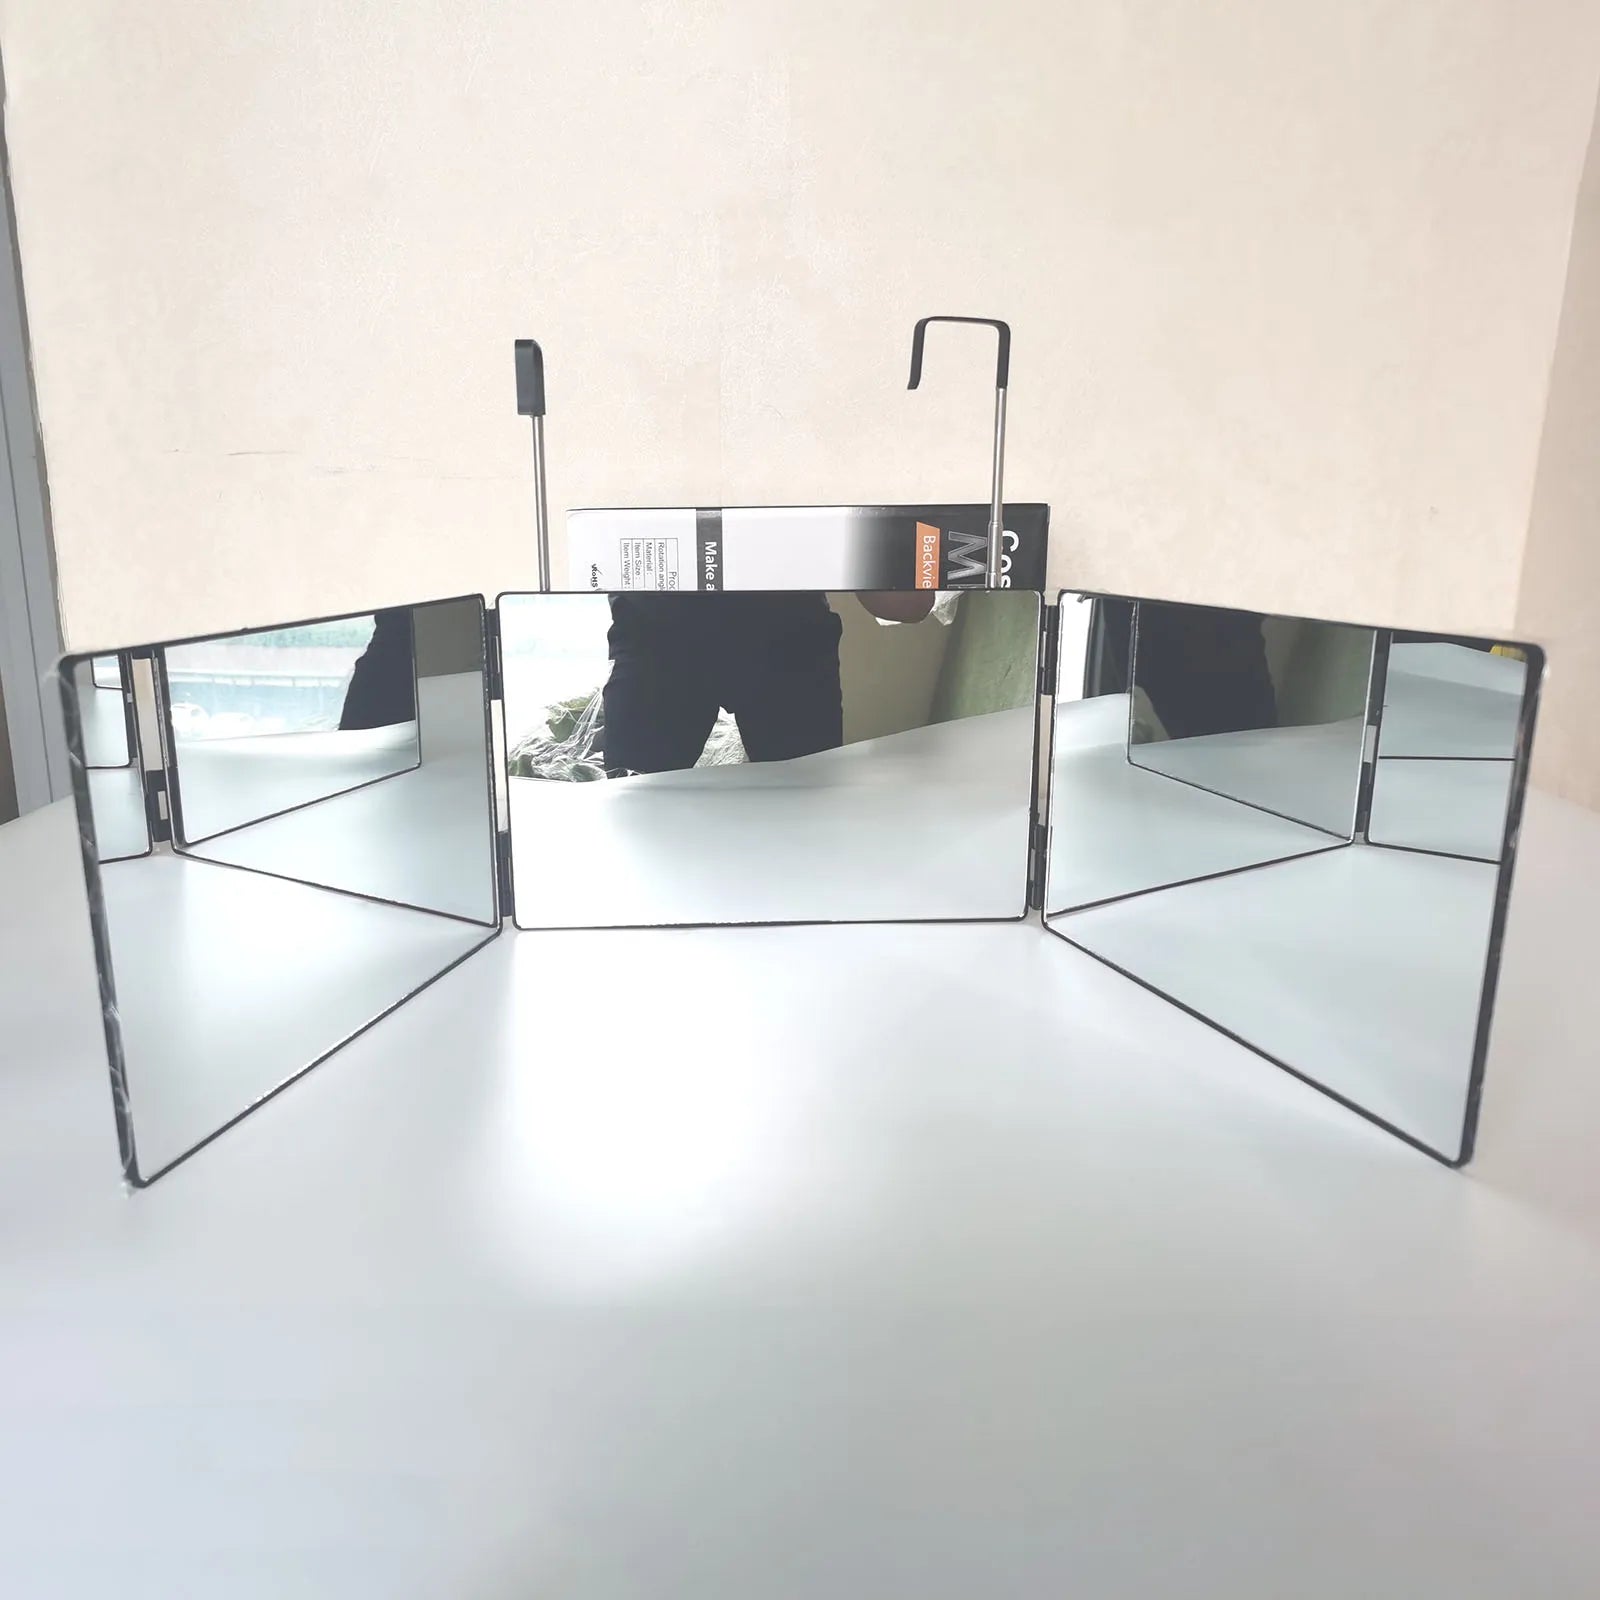 3 Way Mirror Makeup Mirror Foldable Wall Mounted Mirror Makeup Mirror Cosmetic Mirror Door Hanging Mirror Bedroom Locker Room